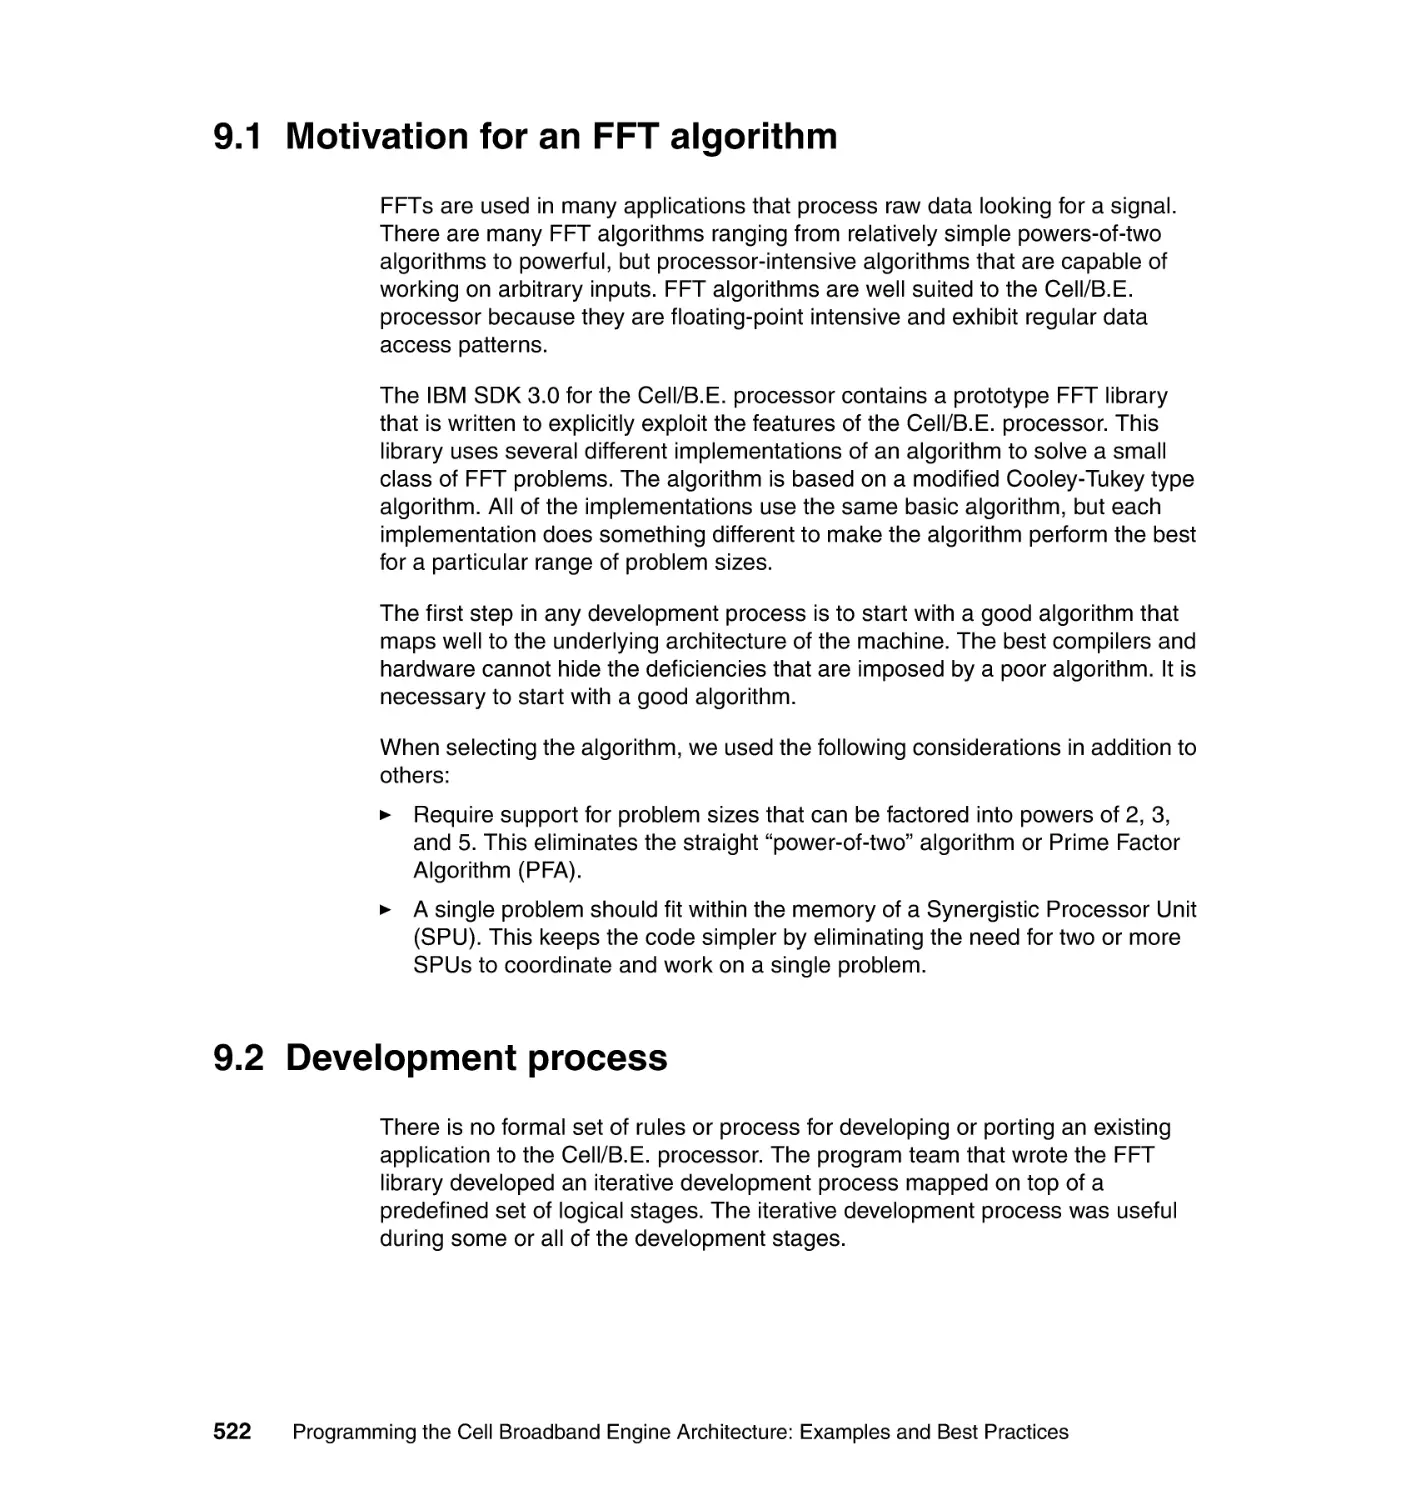 9.1 Motivation for an FFT algorithm
9.2 Development process